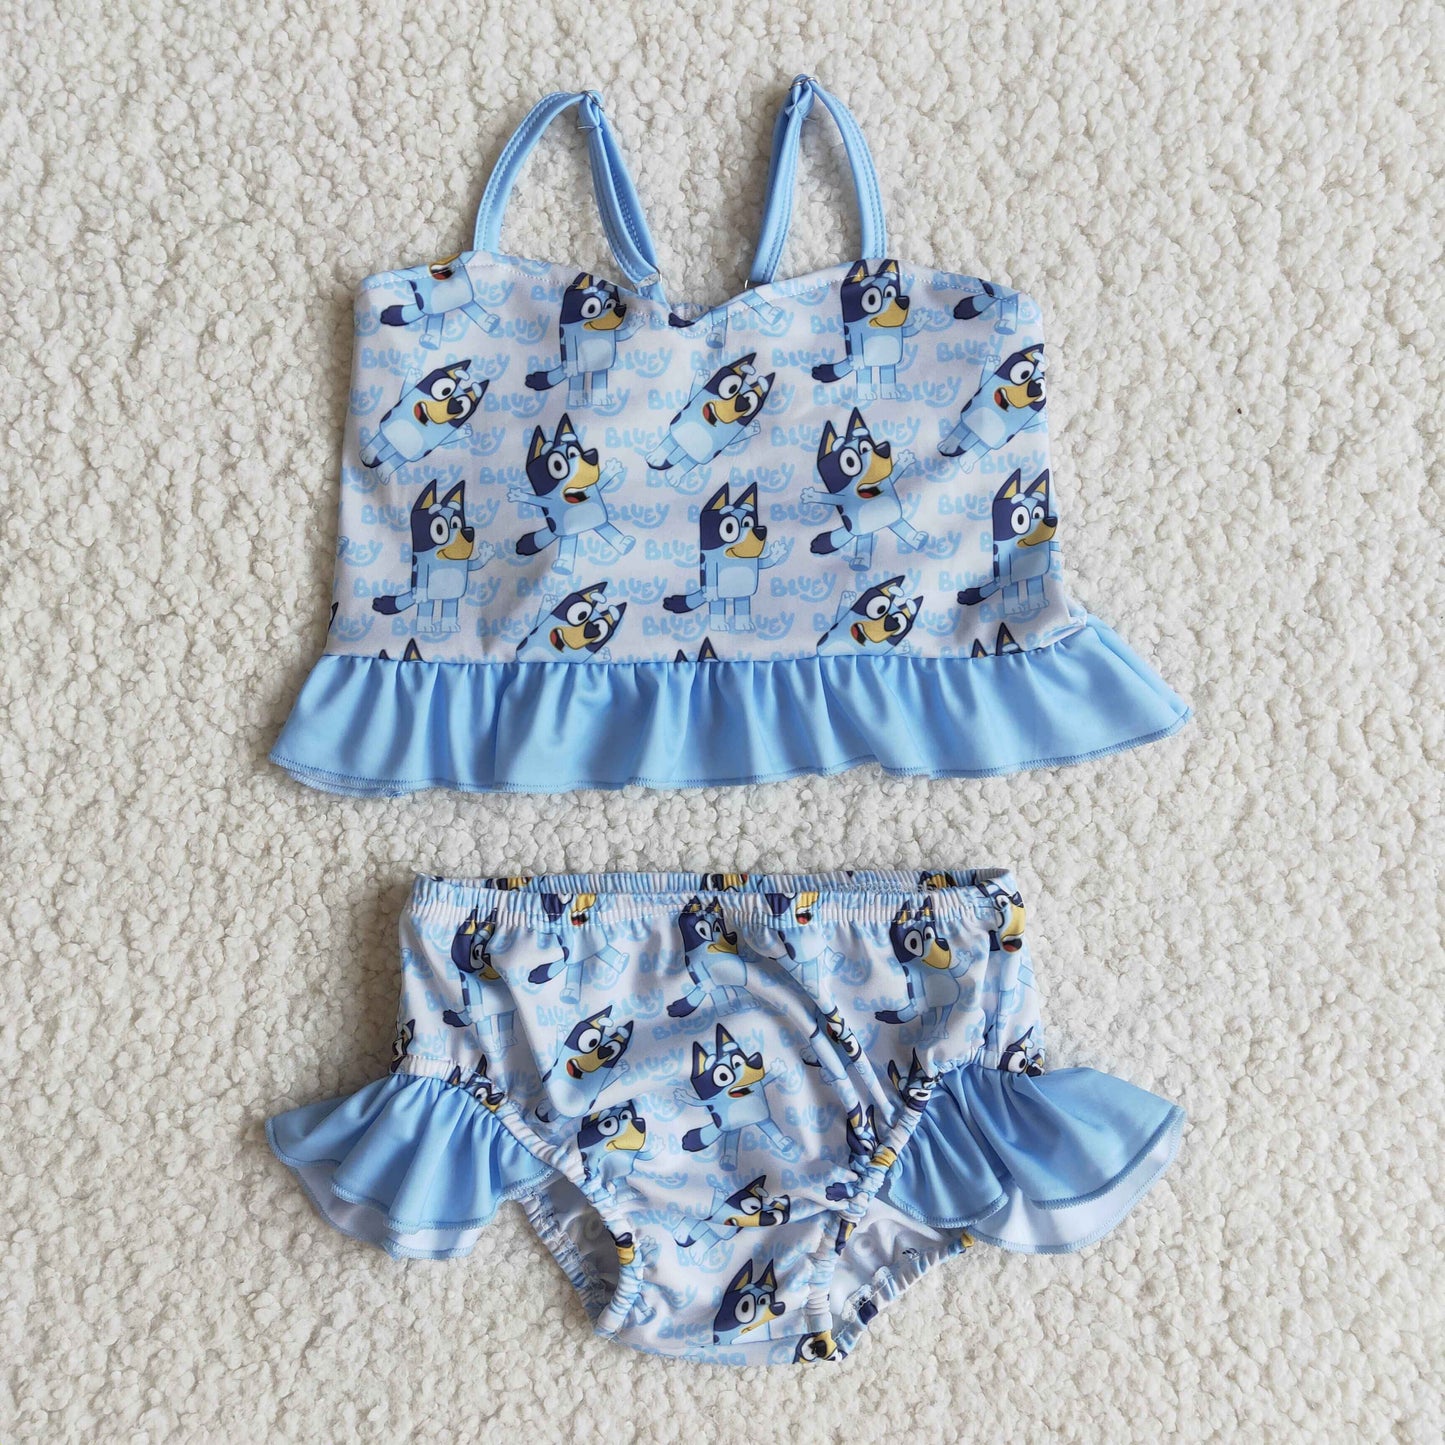 Blue dog print ruffle baby girls summer swimsuit